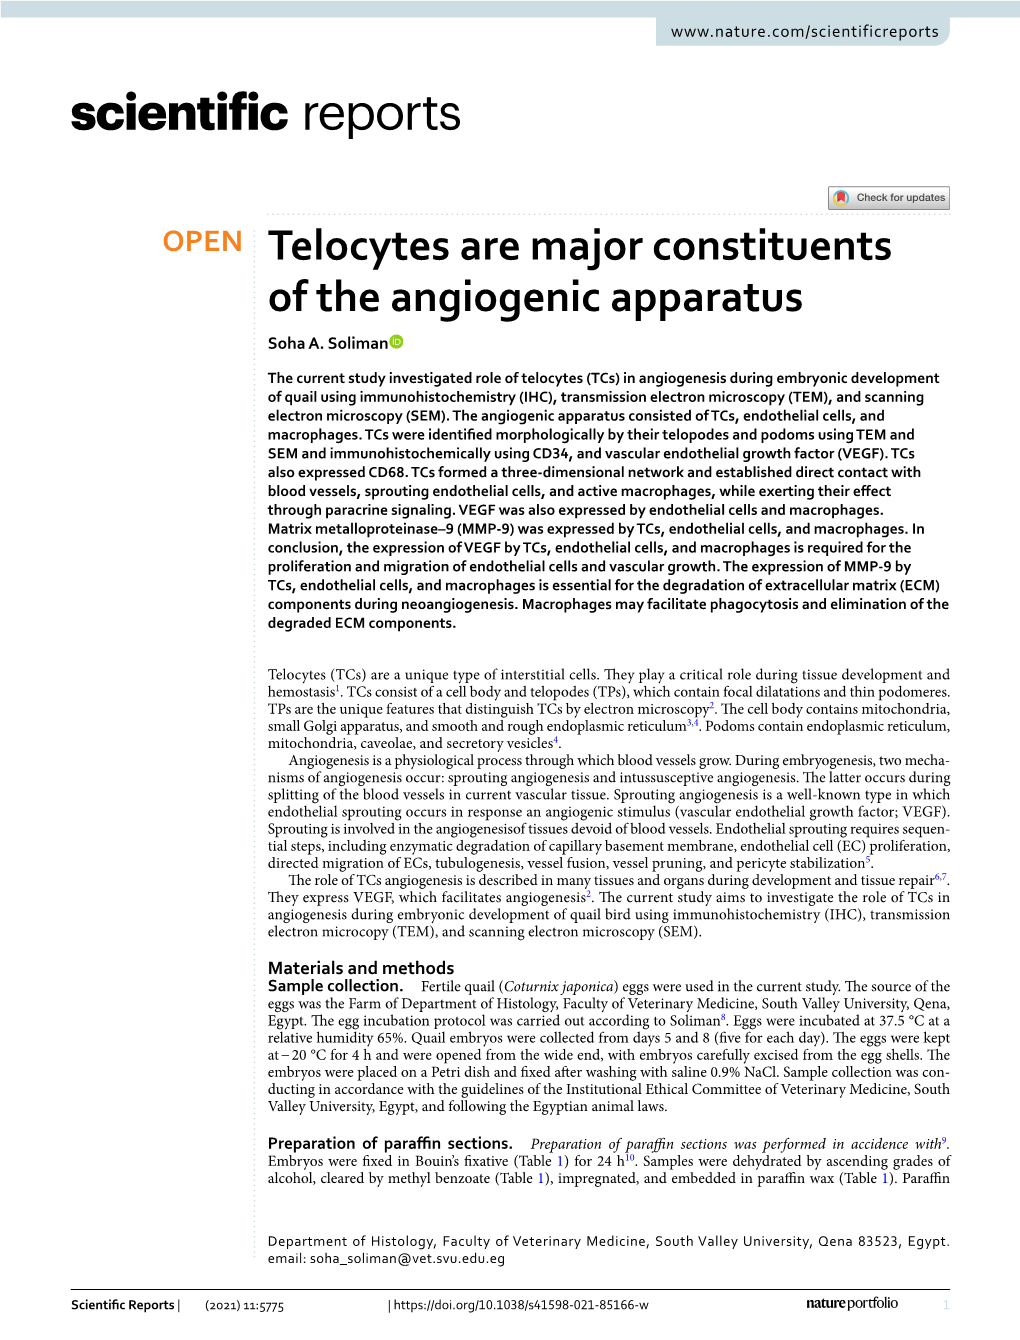 Telocytes Are Major Constituents of the Angiogenic Apparatus Soha A